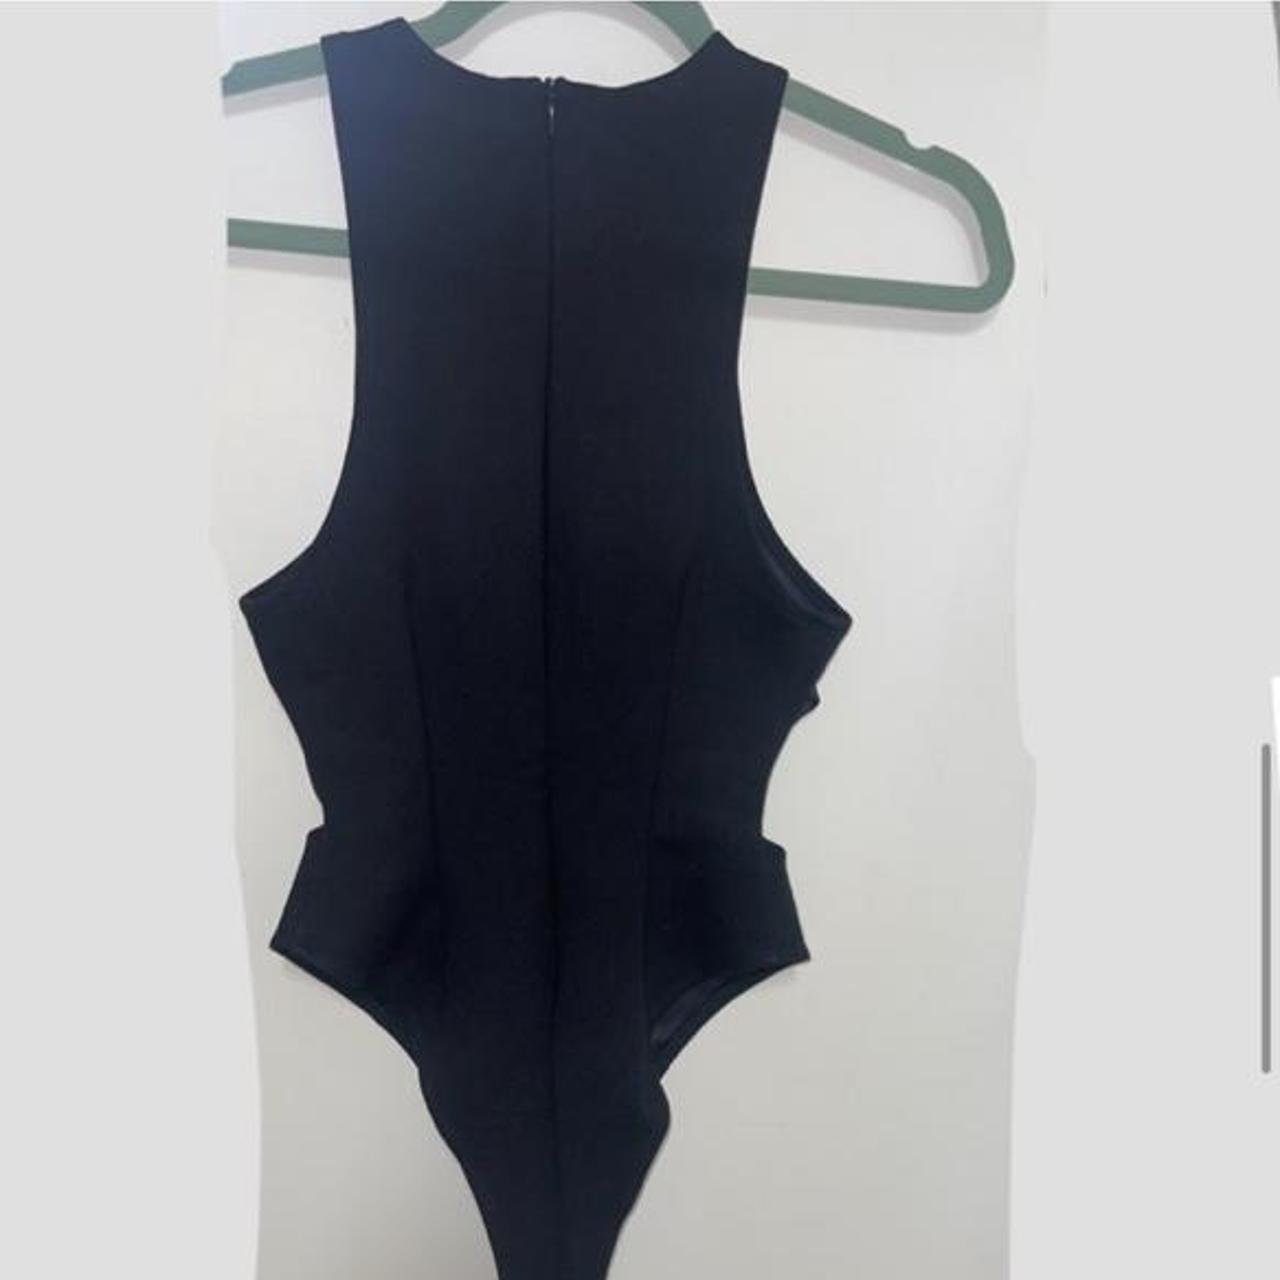 Product Image 4 - Atoir Bianca bodysuit

Size small fits